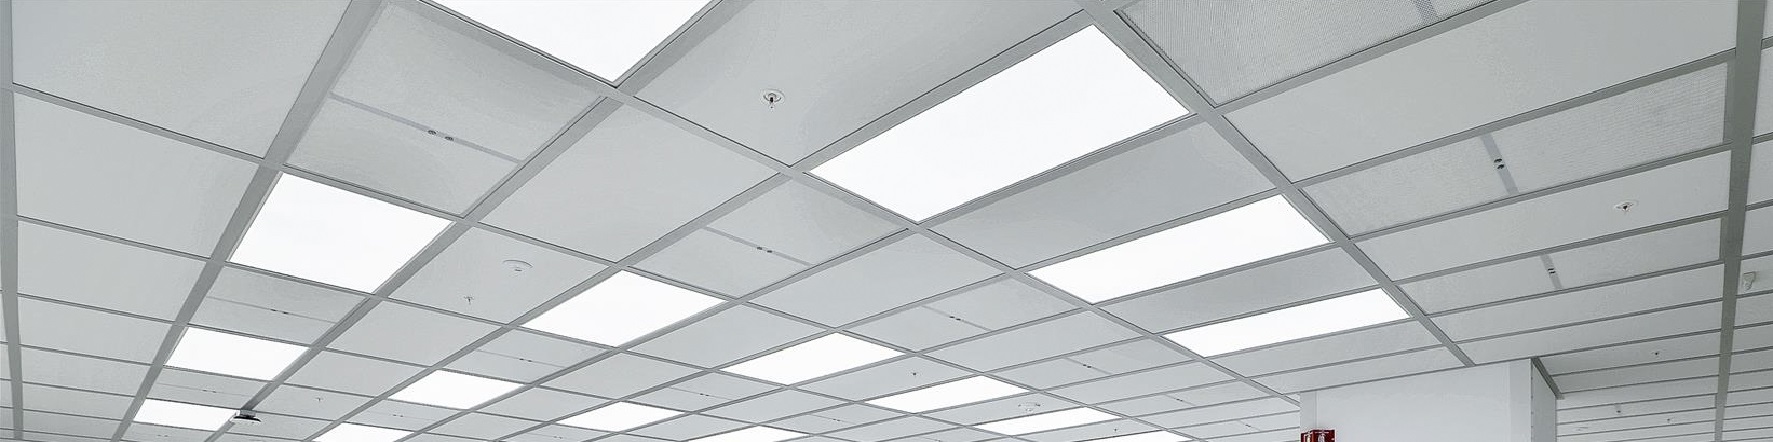 Modular ceiling panels